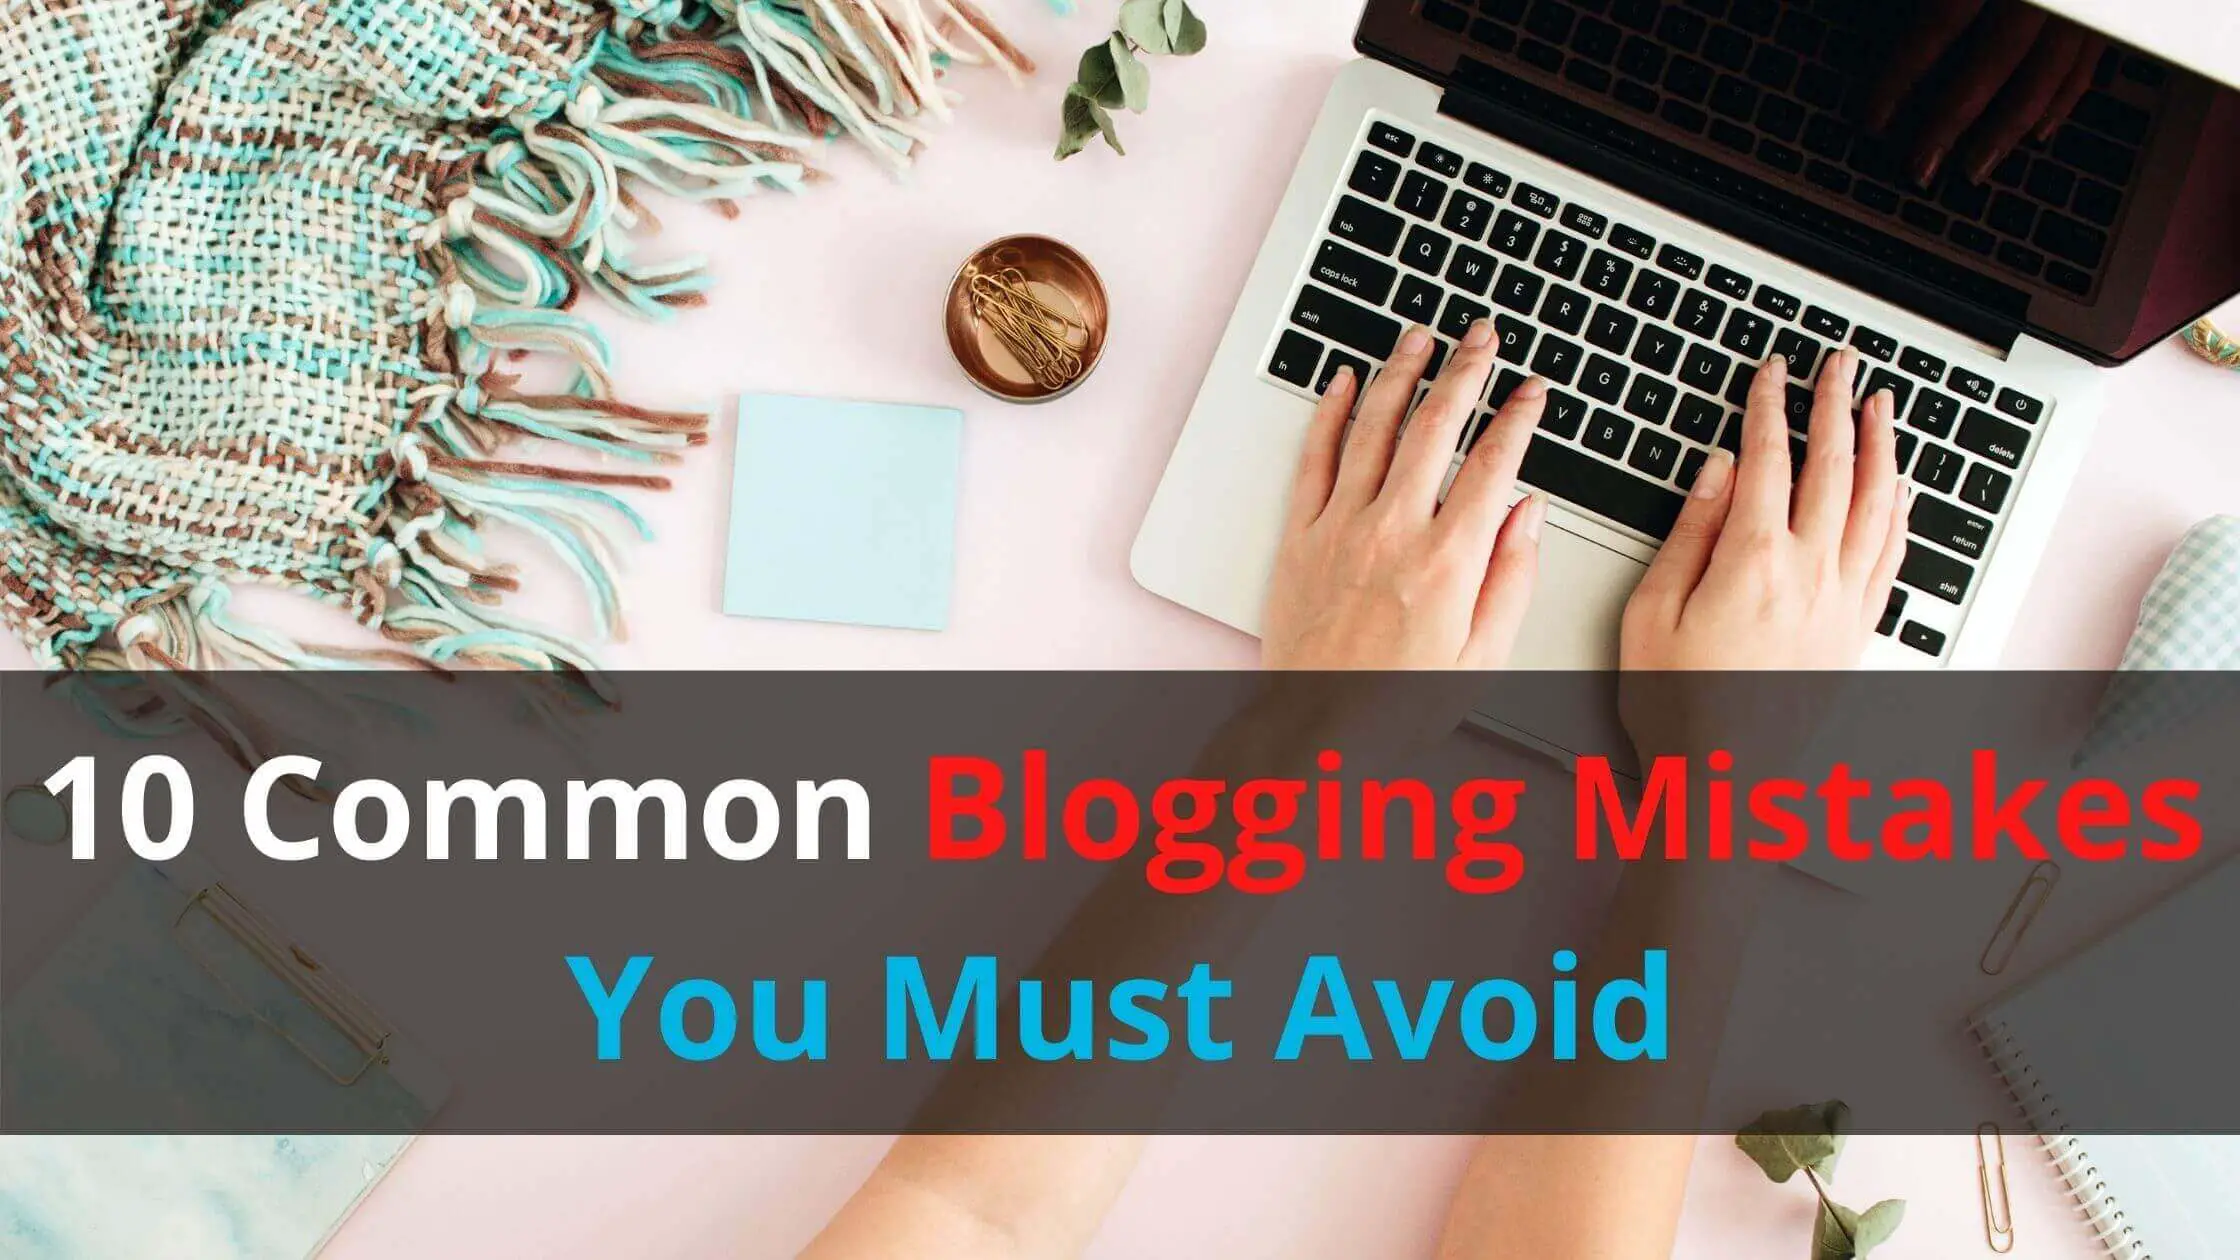 Common blogging mistakes